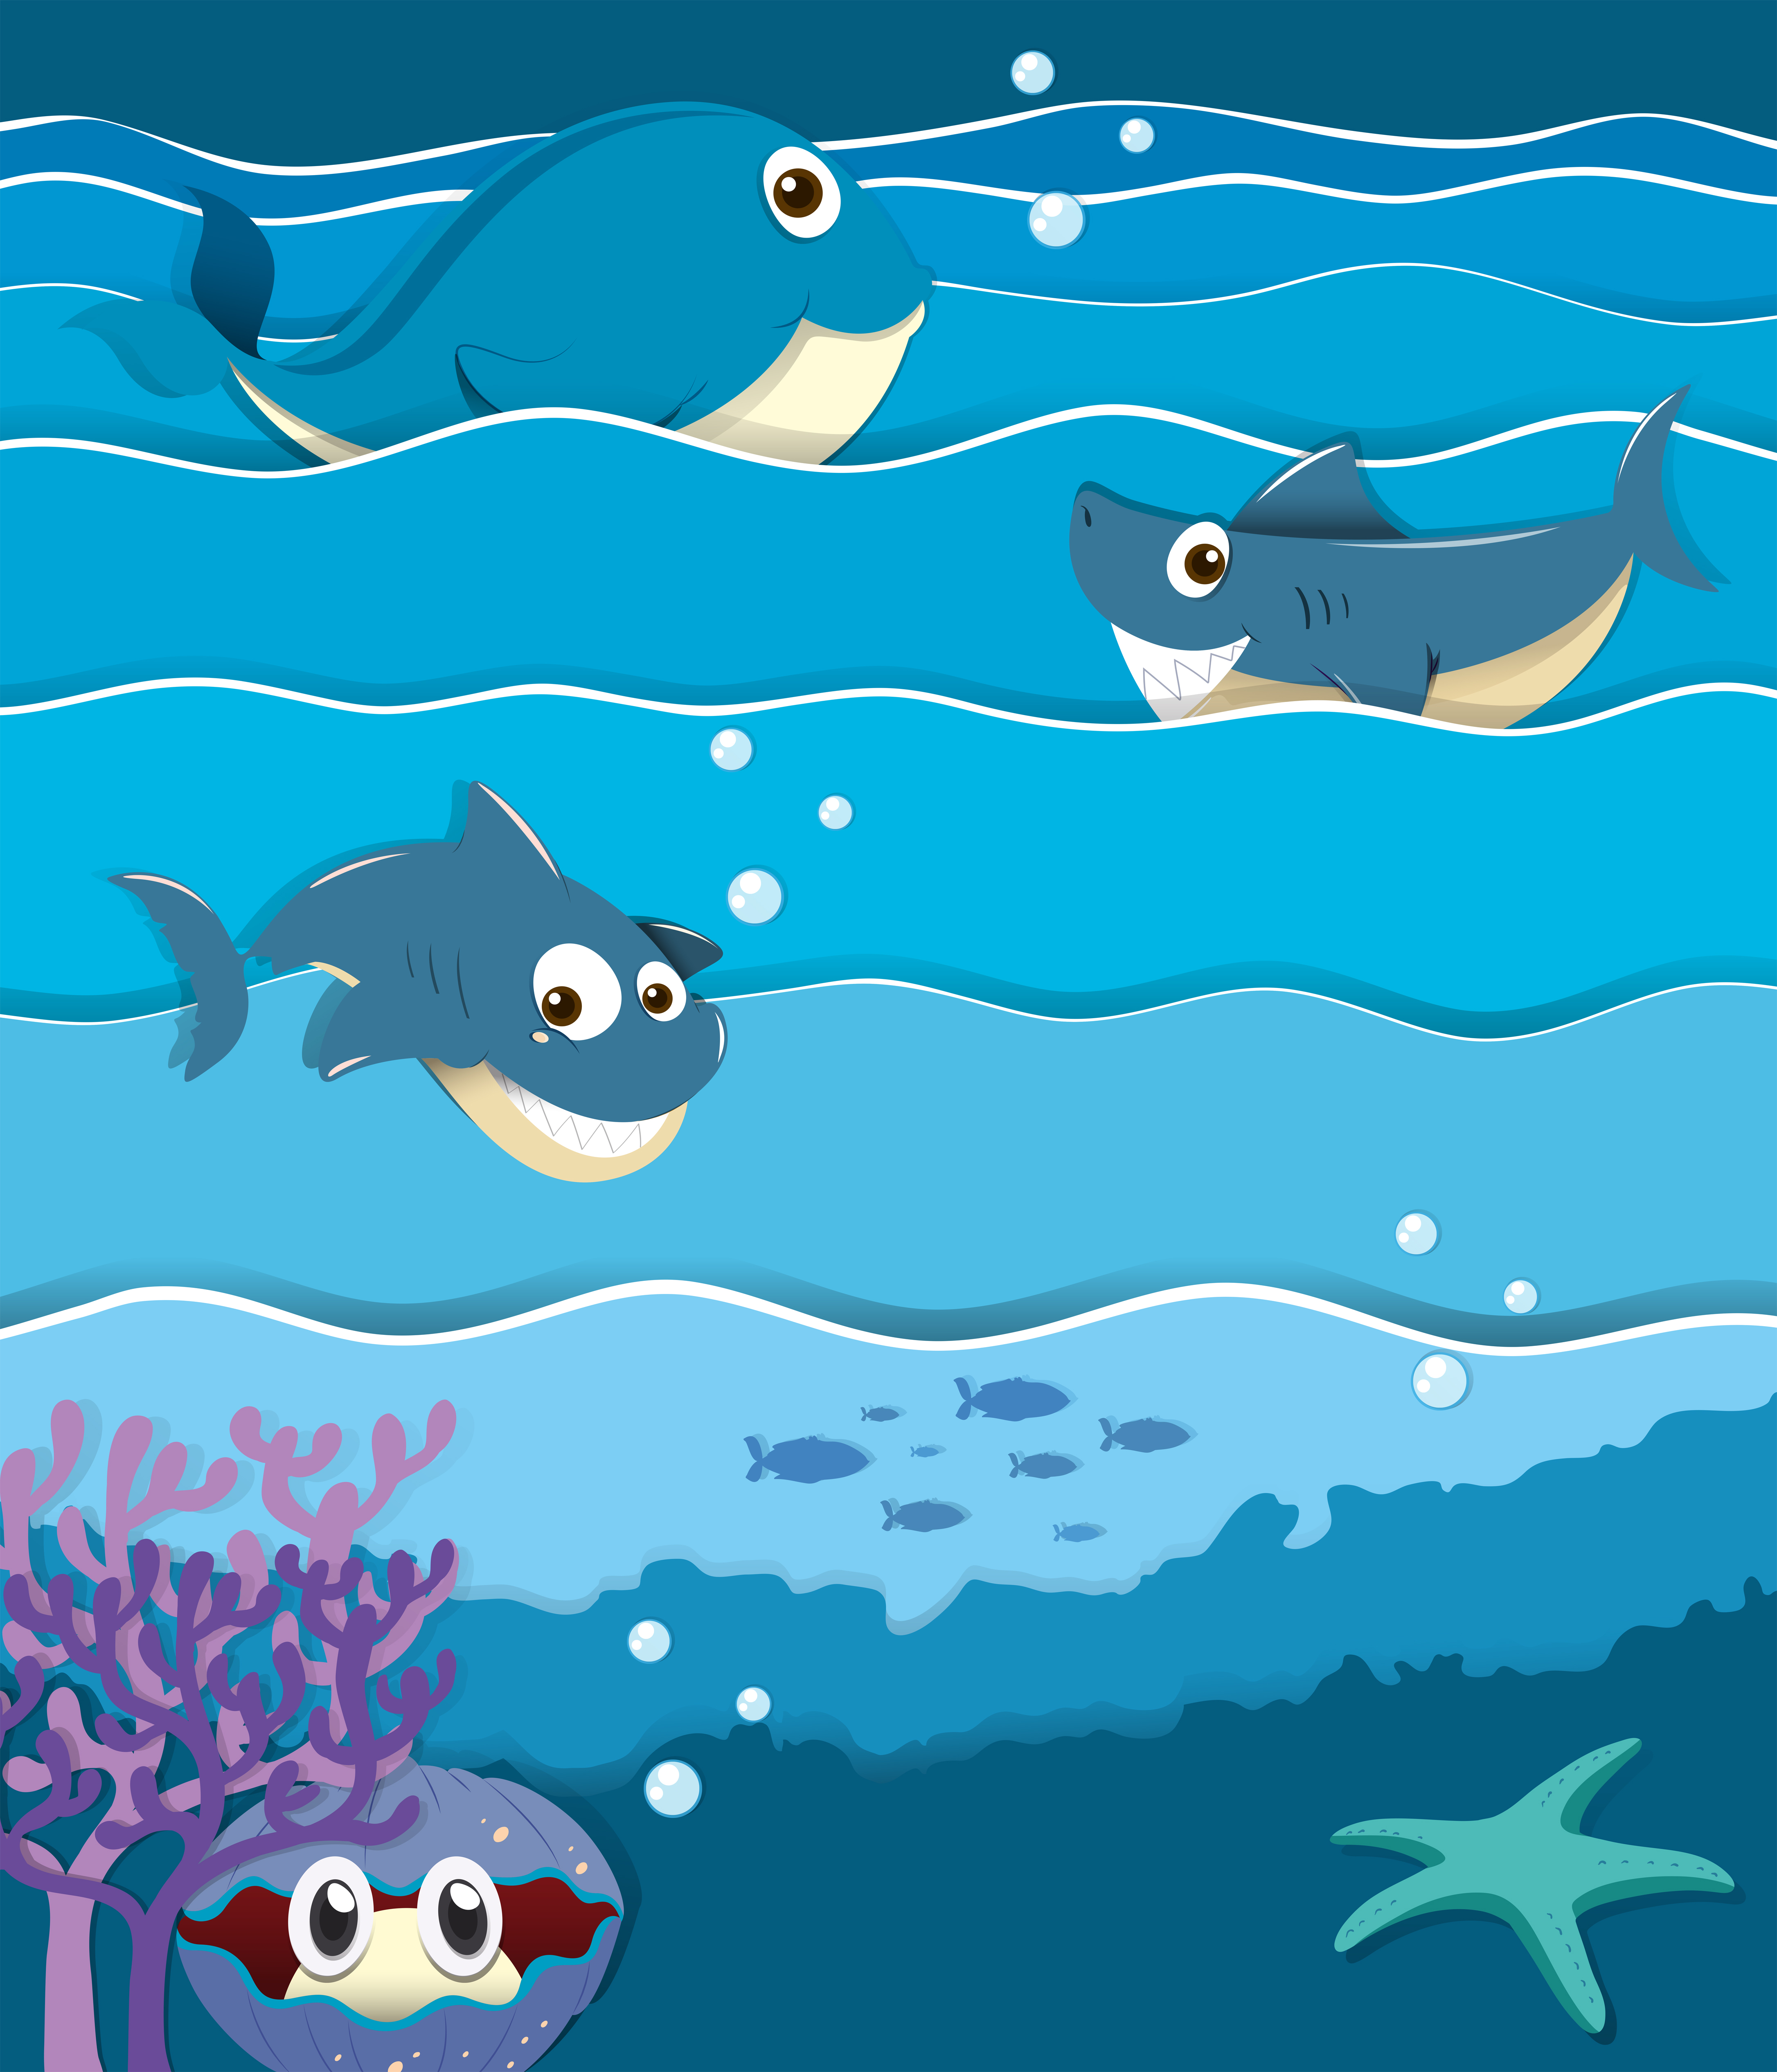 Download Sea animals under the ocean 368462 - Download Free Vectors ...